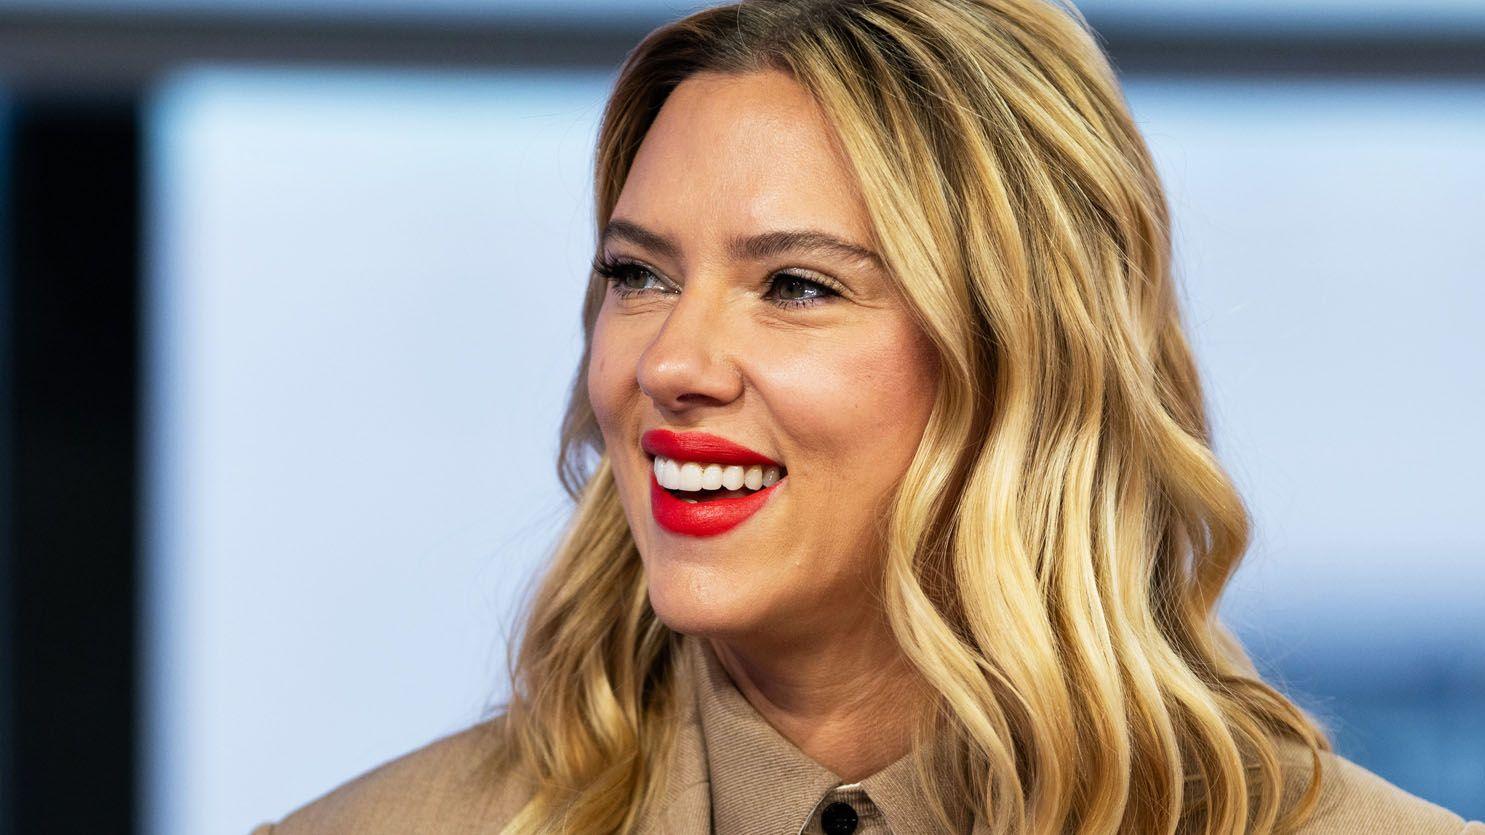 Scarlett Johansson shocked by AI chatbot imitation